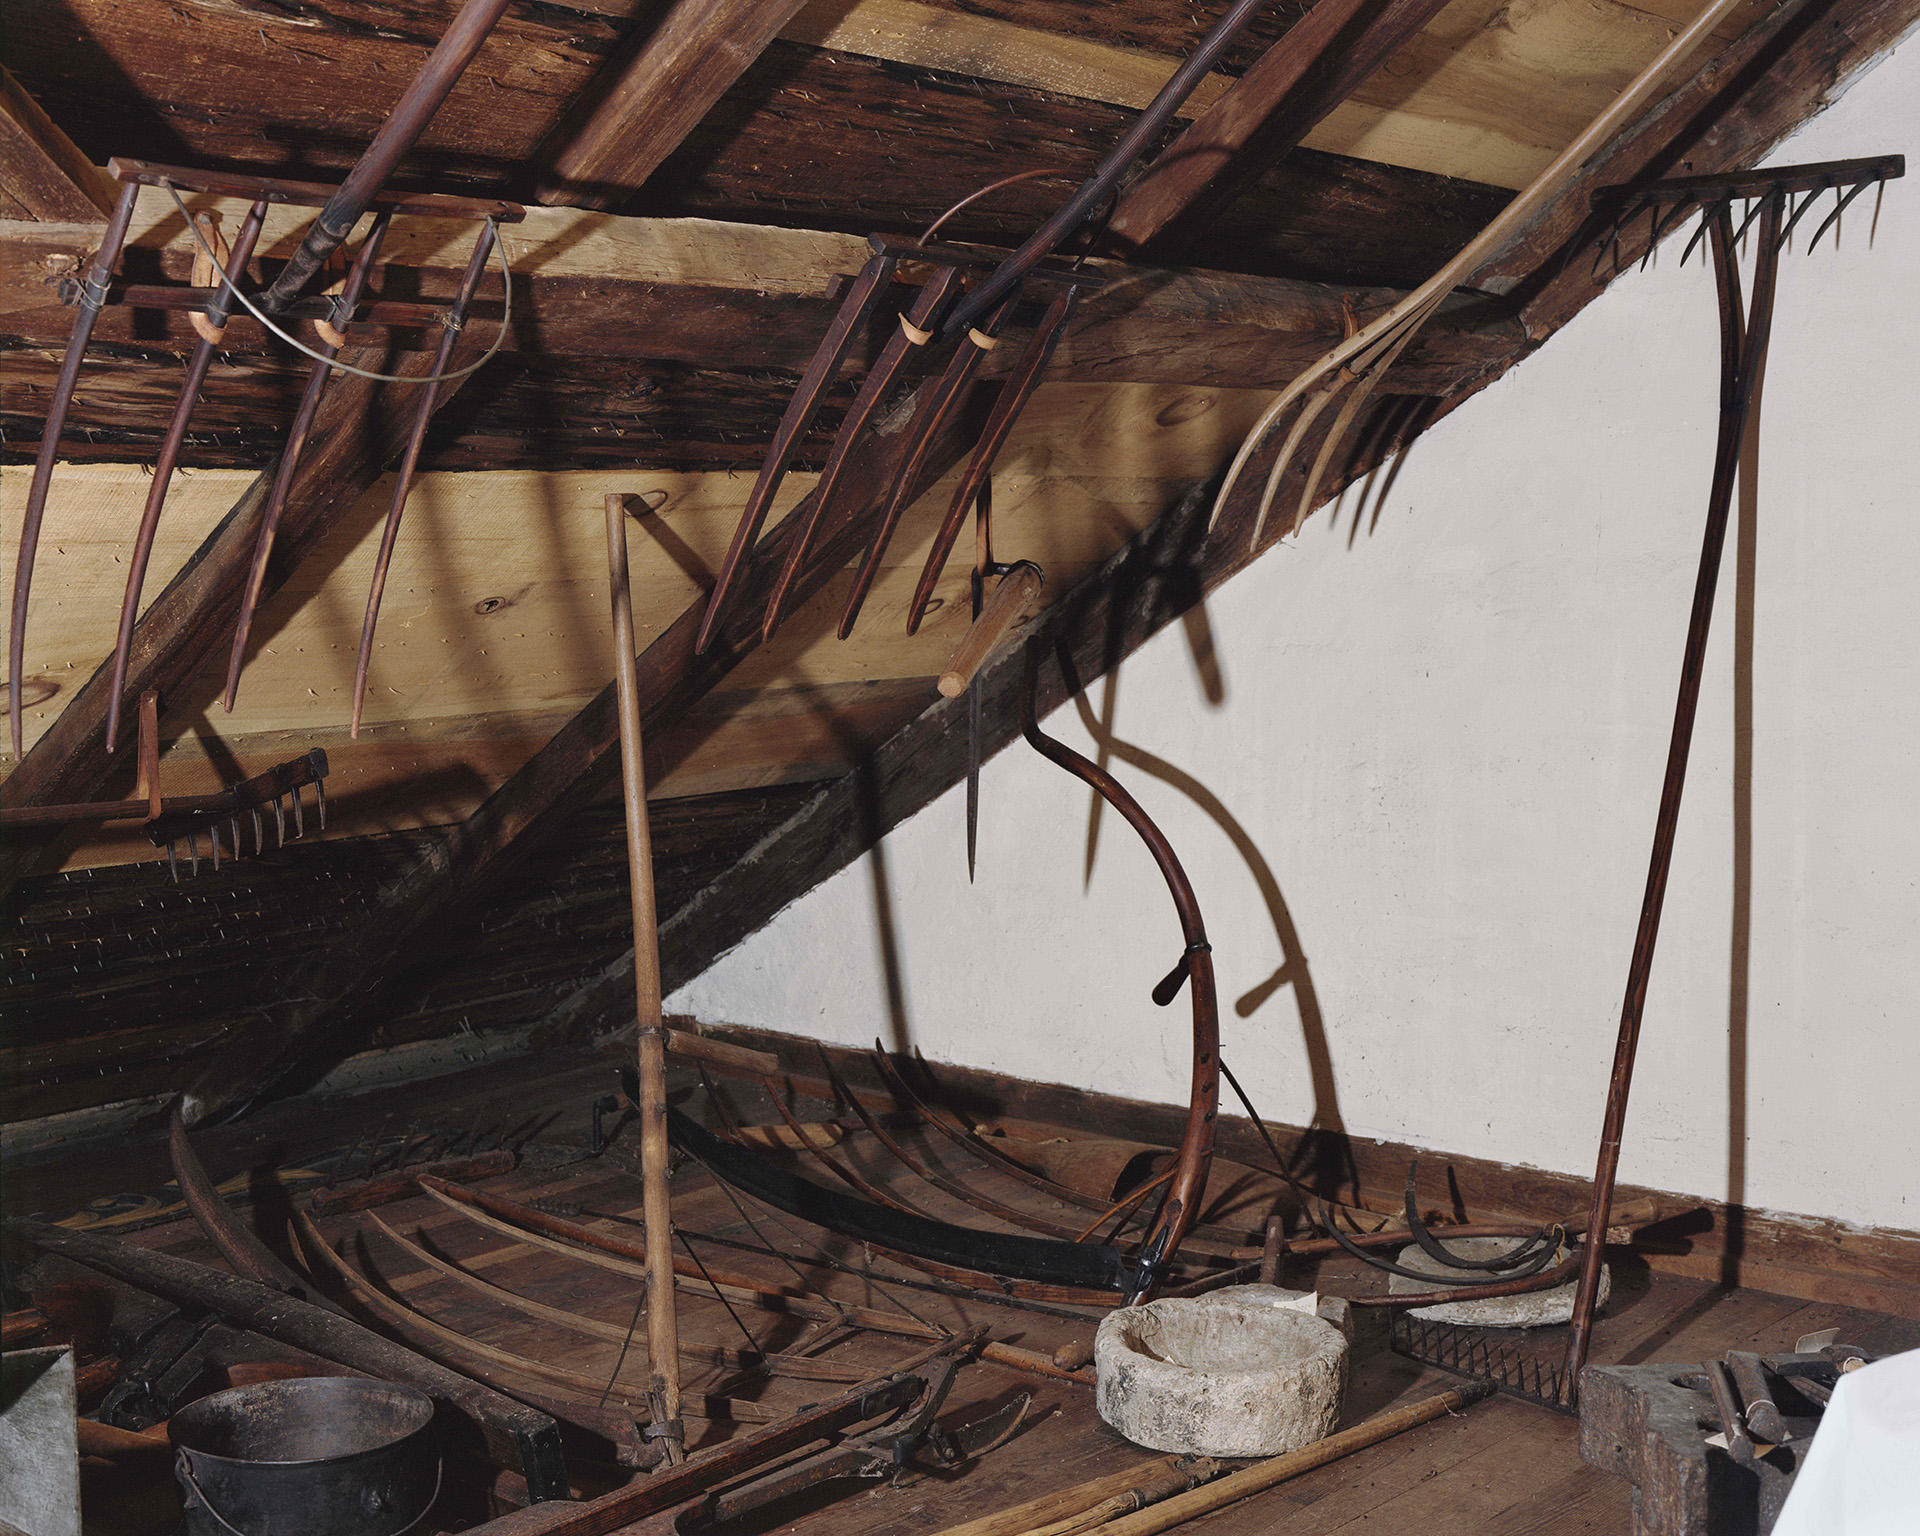 Photograph of various farmings tools hung in a dark attic.